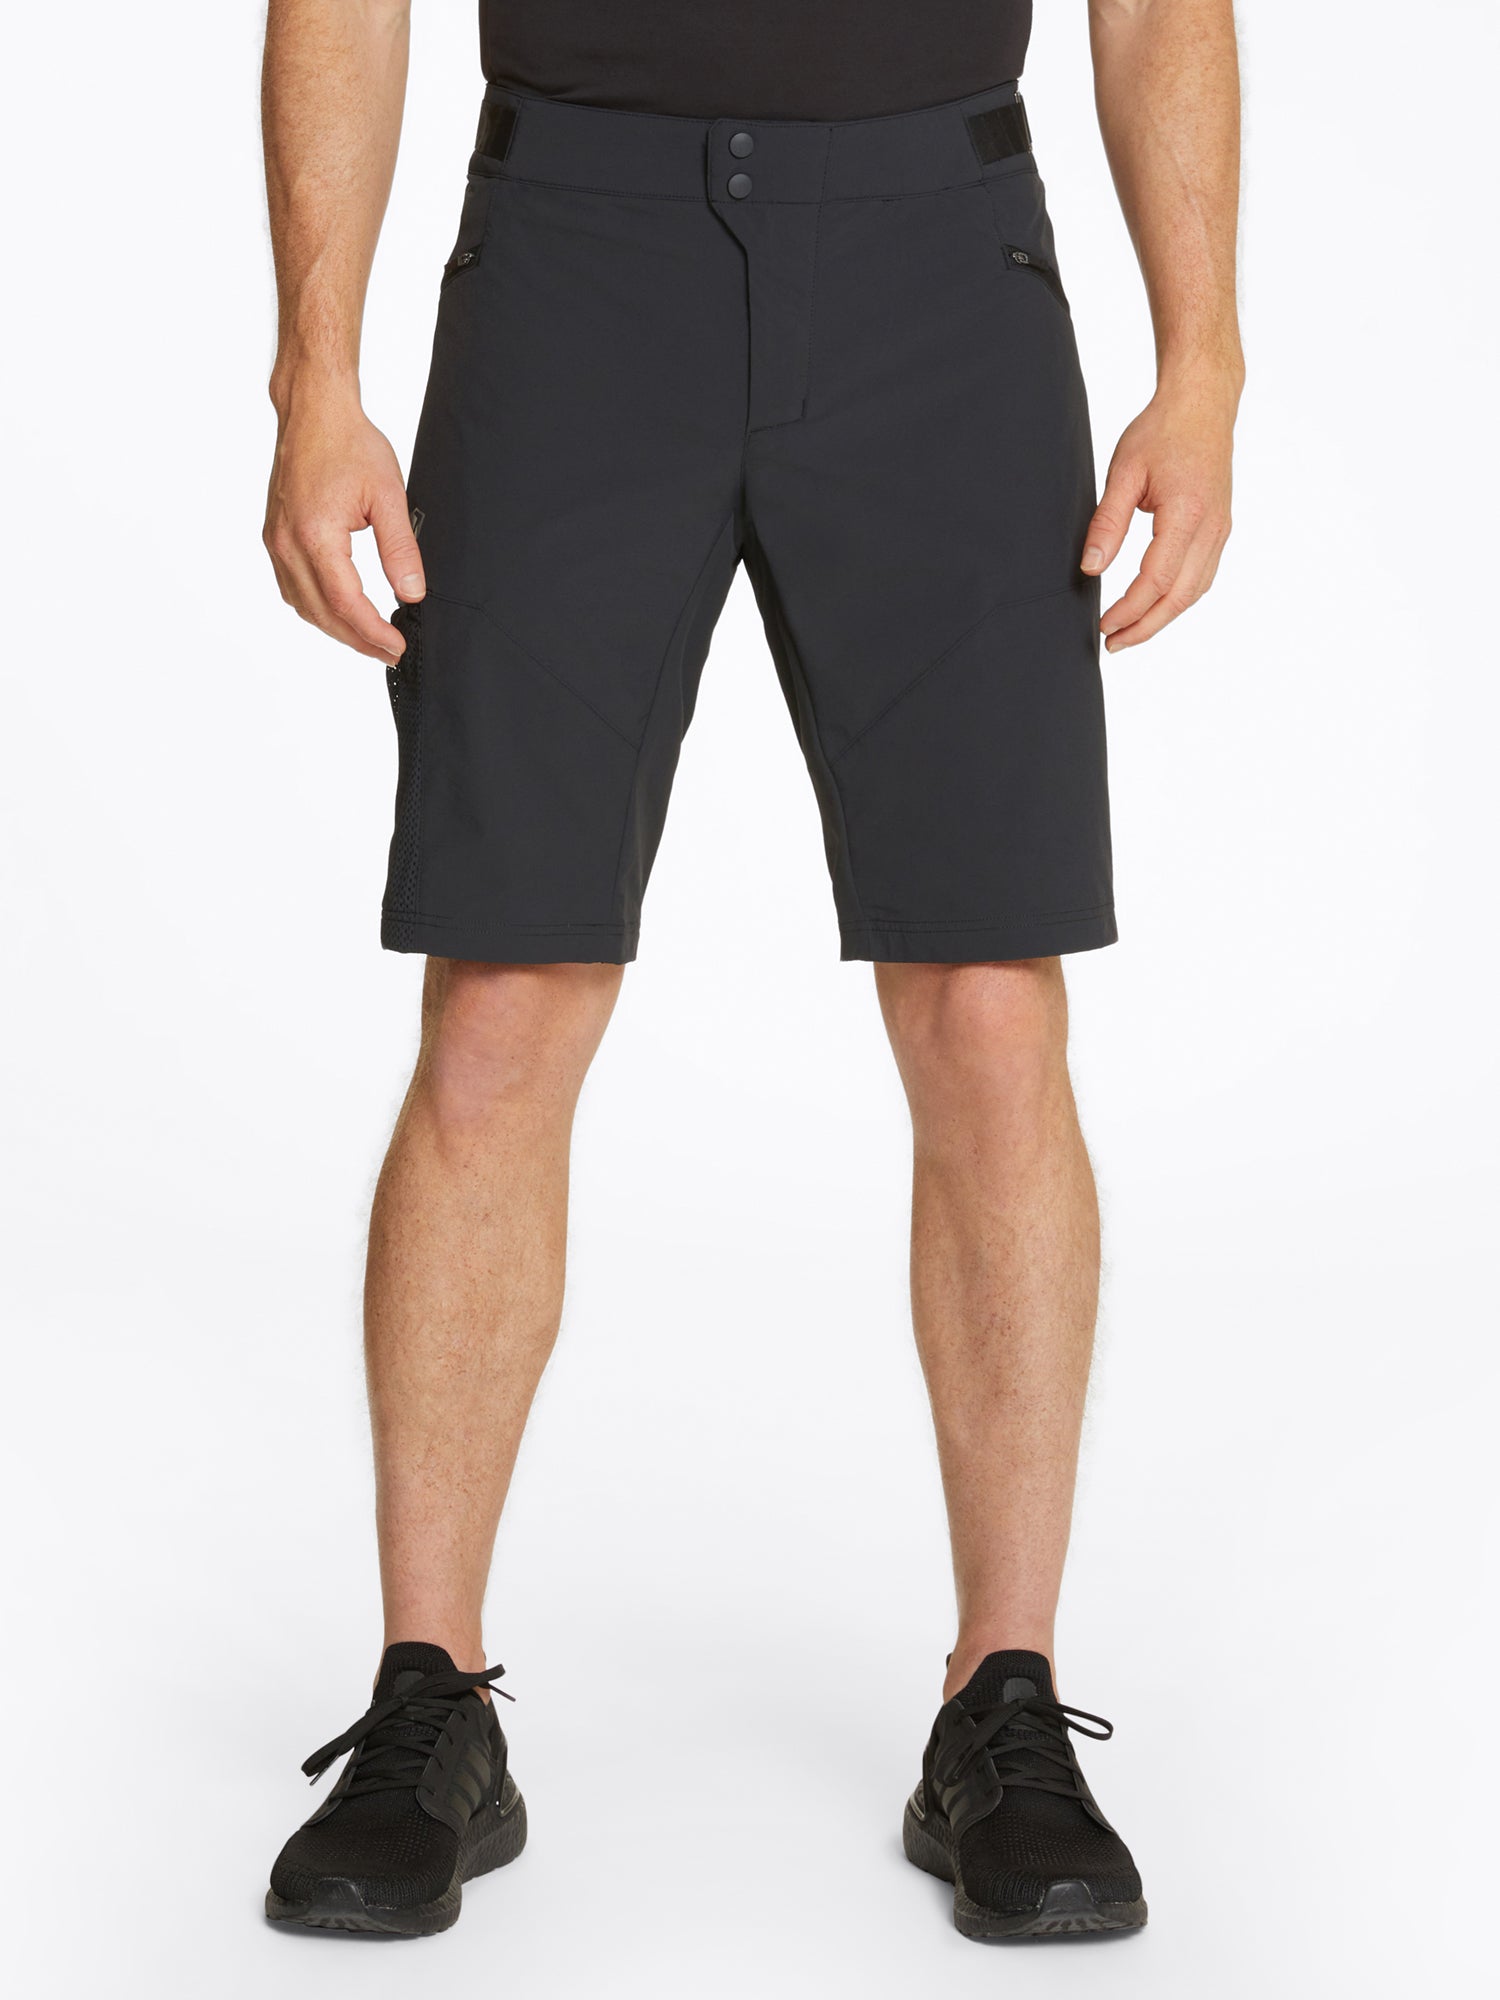 NEXIL man (shorts)